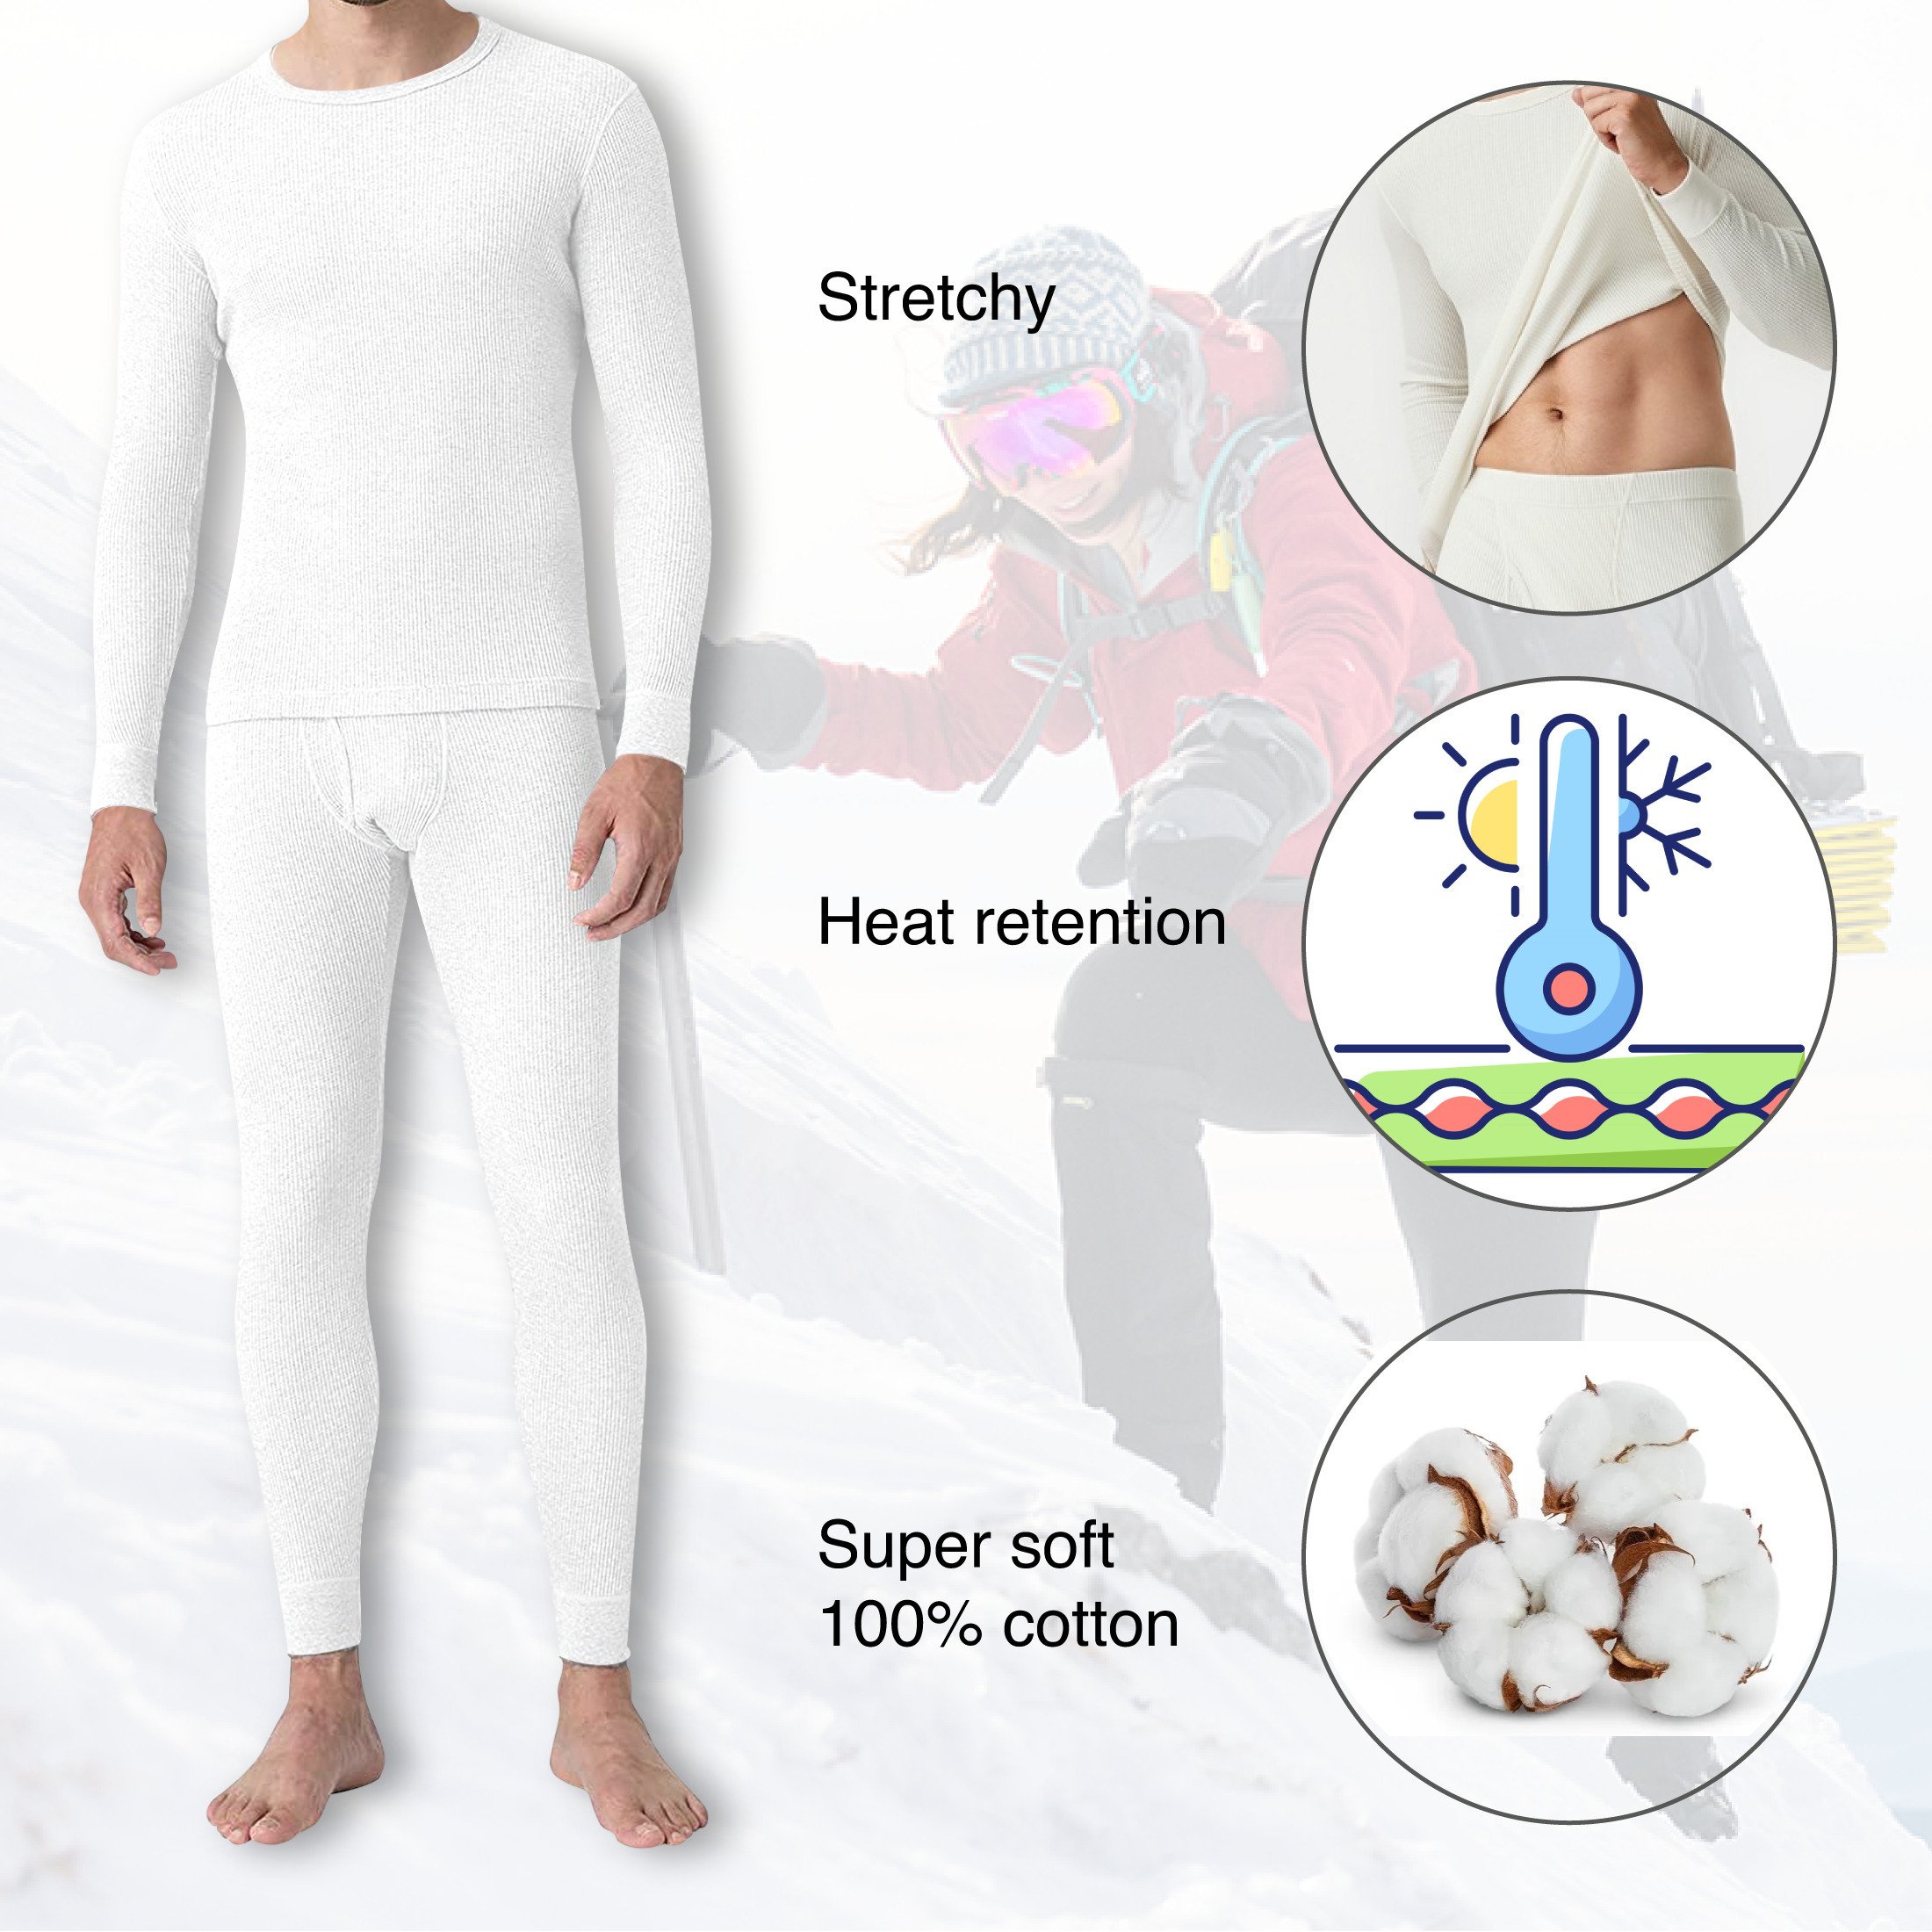 2-Sets: Men's Super Soft Cotton Waffle Knit Winter Thermal Underwear Set - Black & White, X-Large